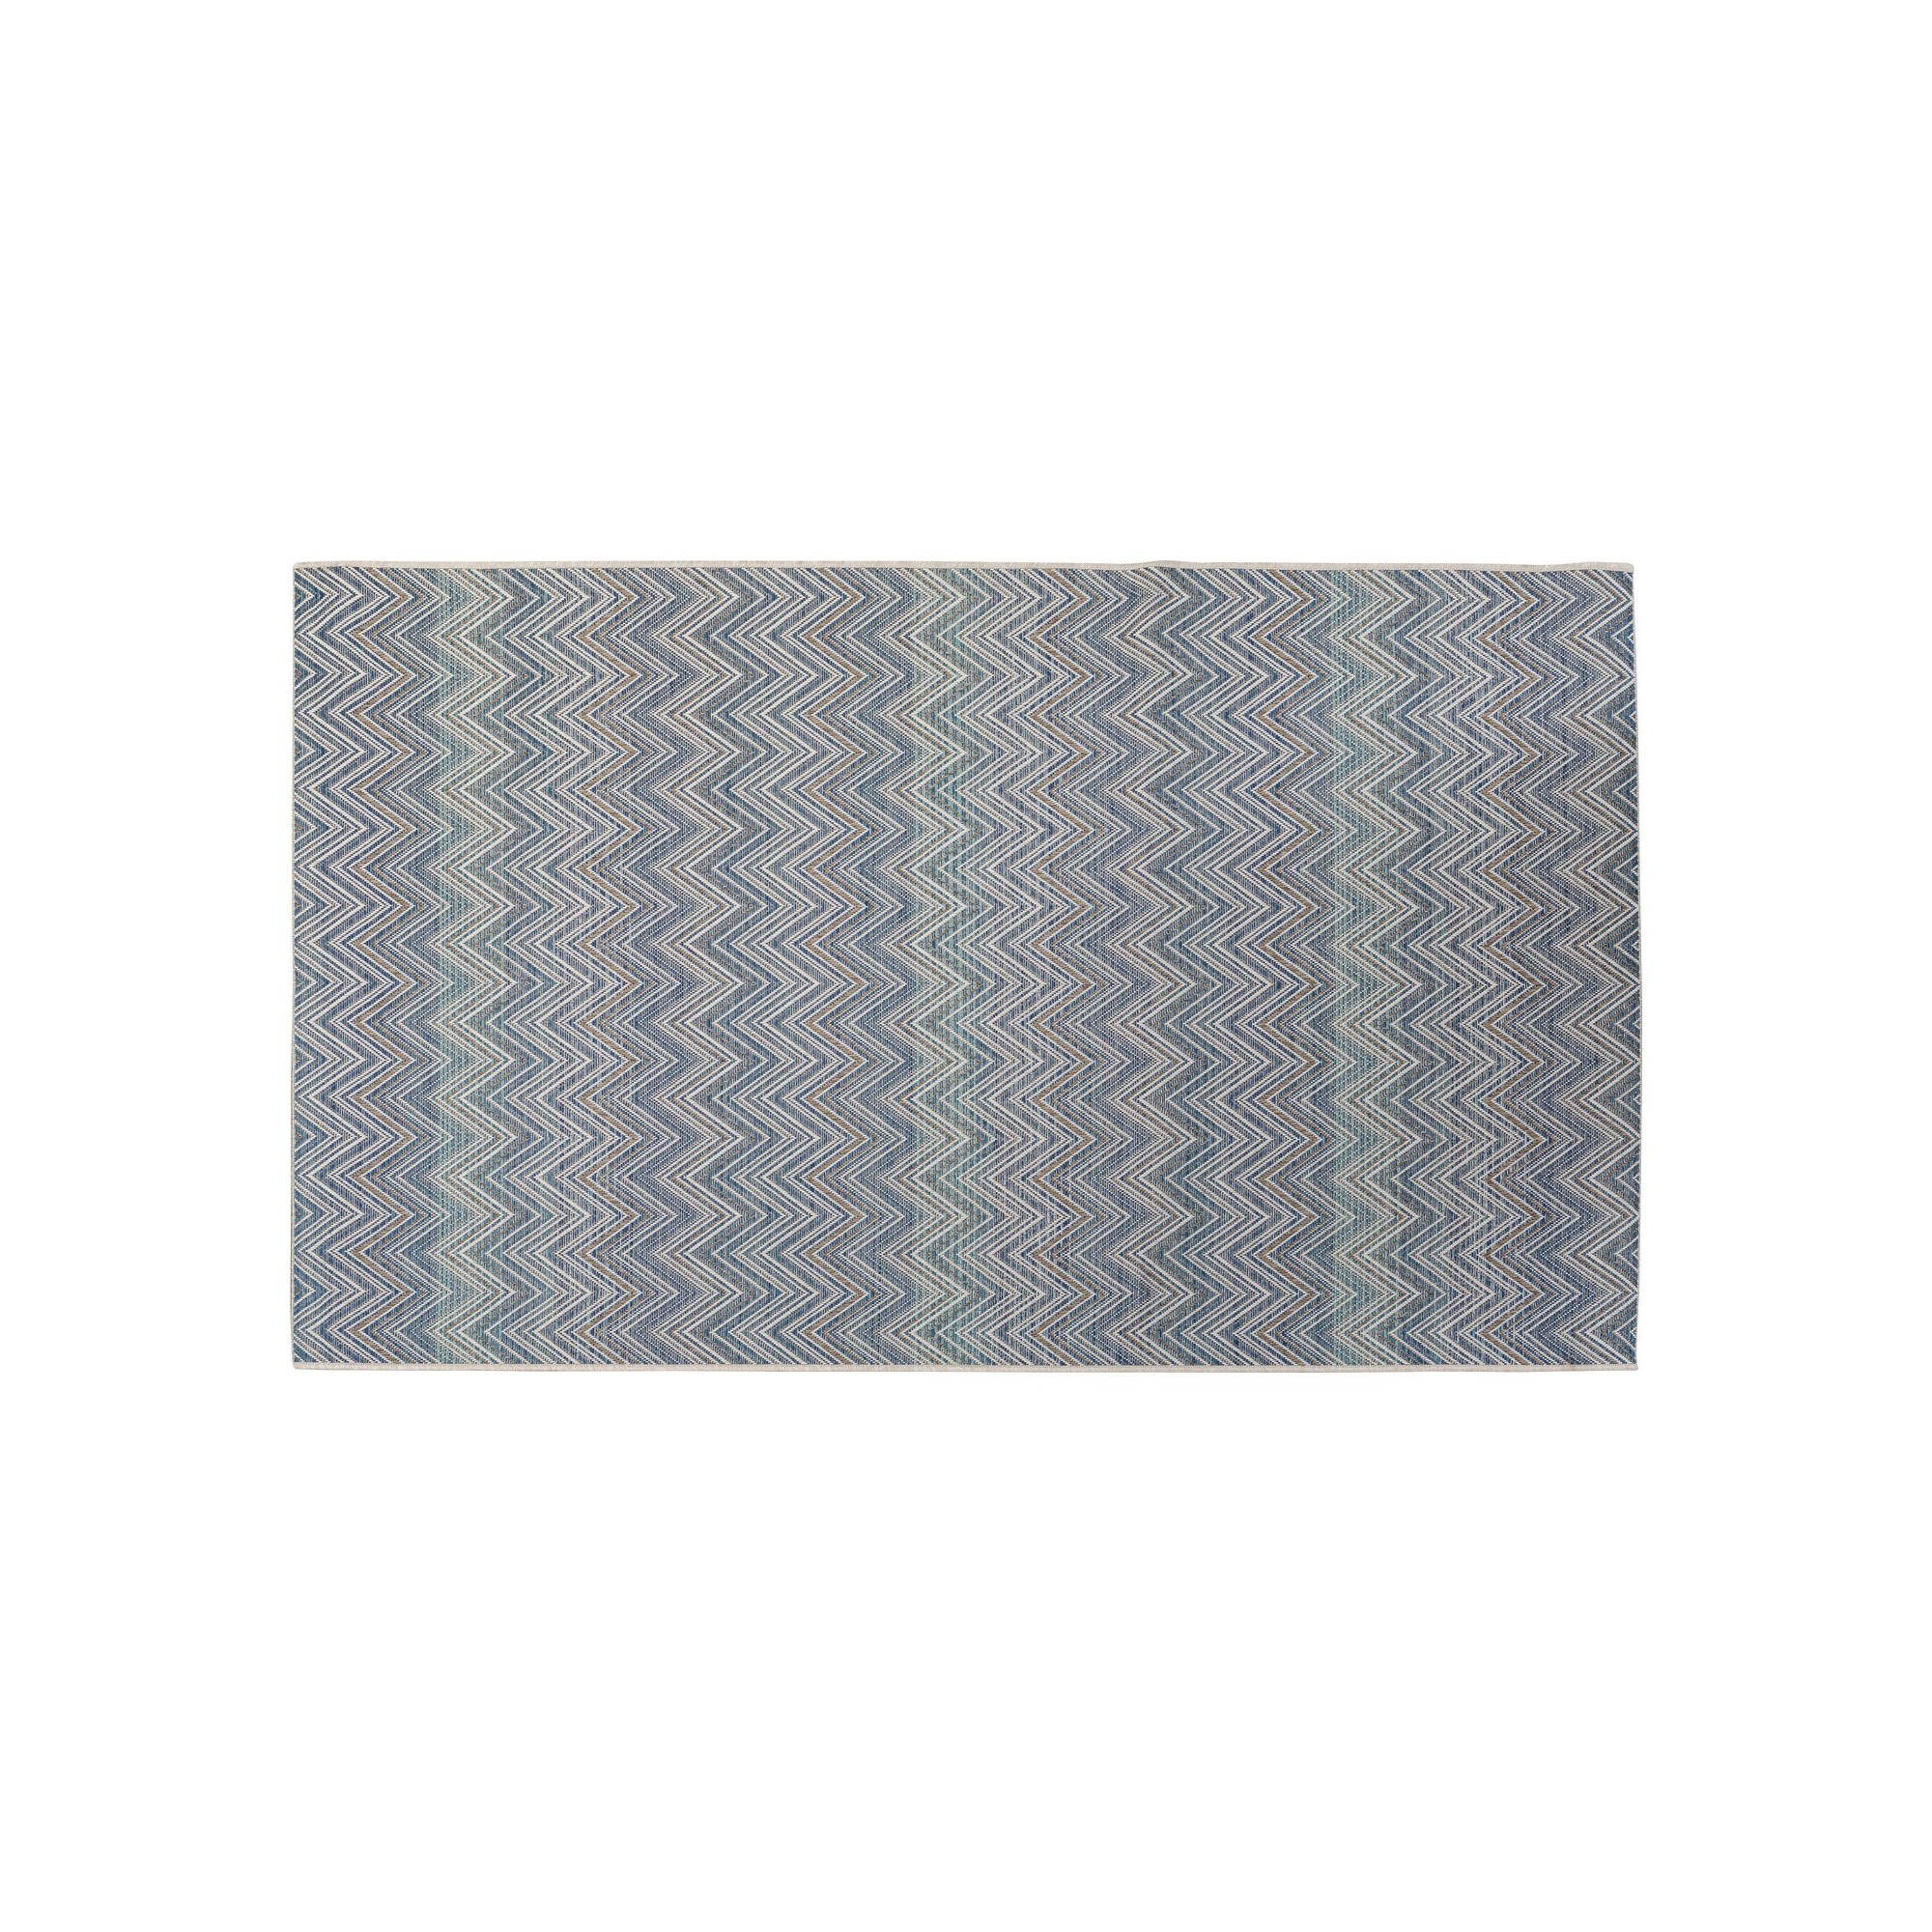 Tapis Zigzag bleu 230x160cm Kare Design